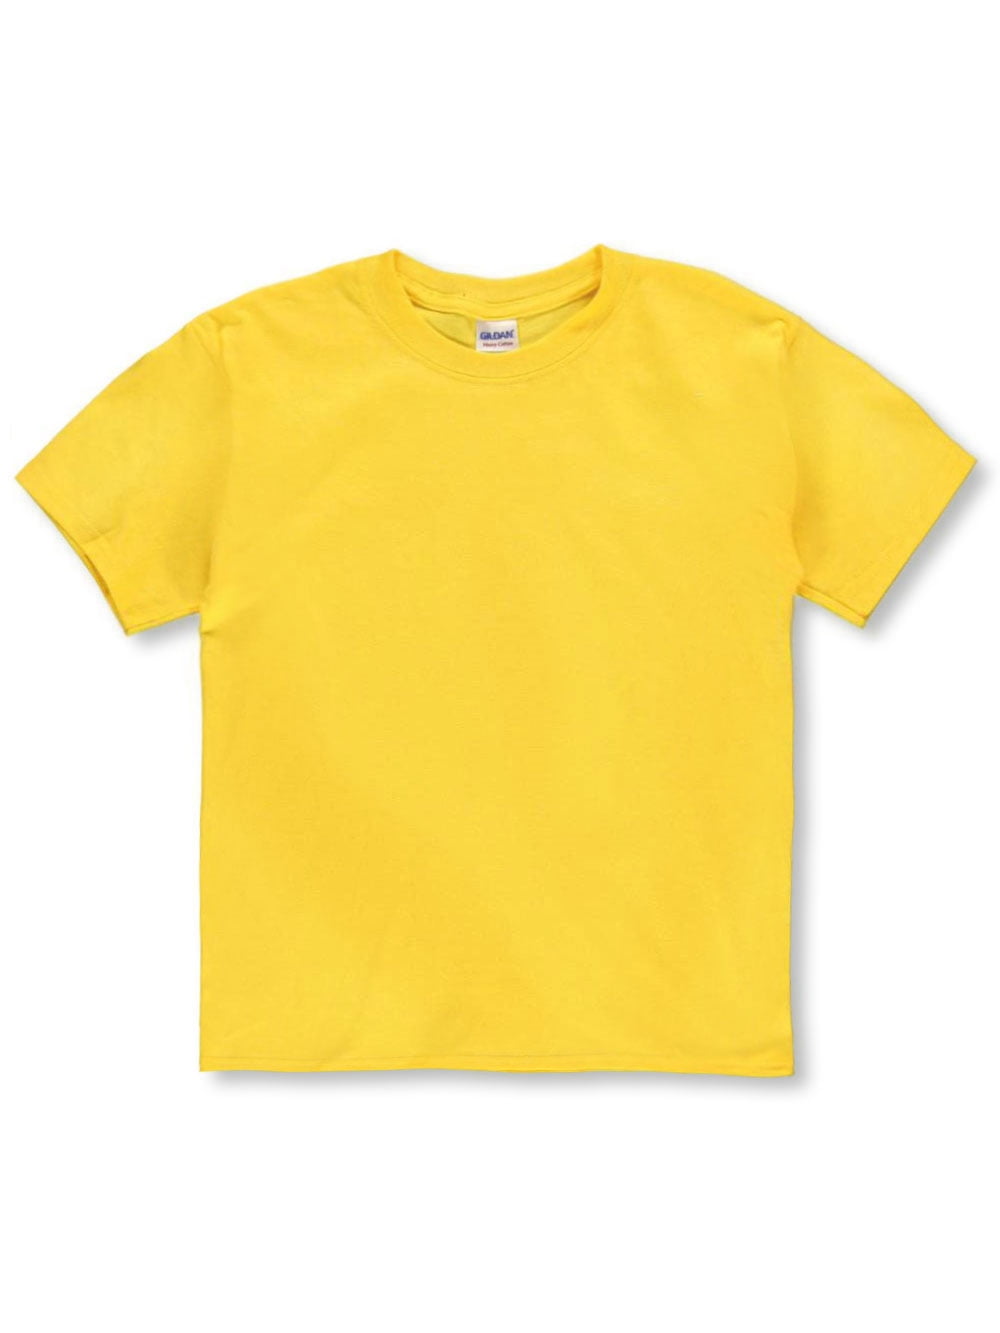 Gildan Unisex Youth T-Shirt - yellow, xl/18-20 (Big Girls) - Walmart.com